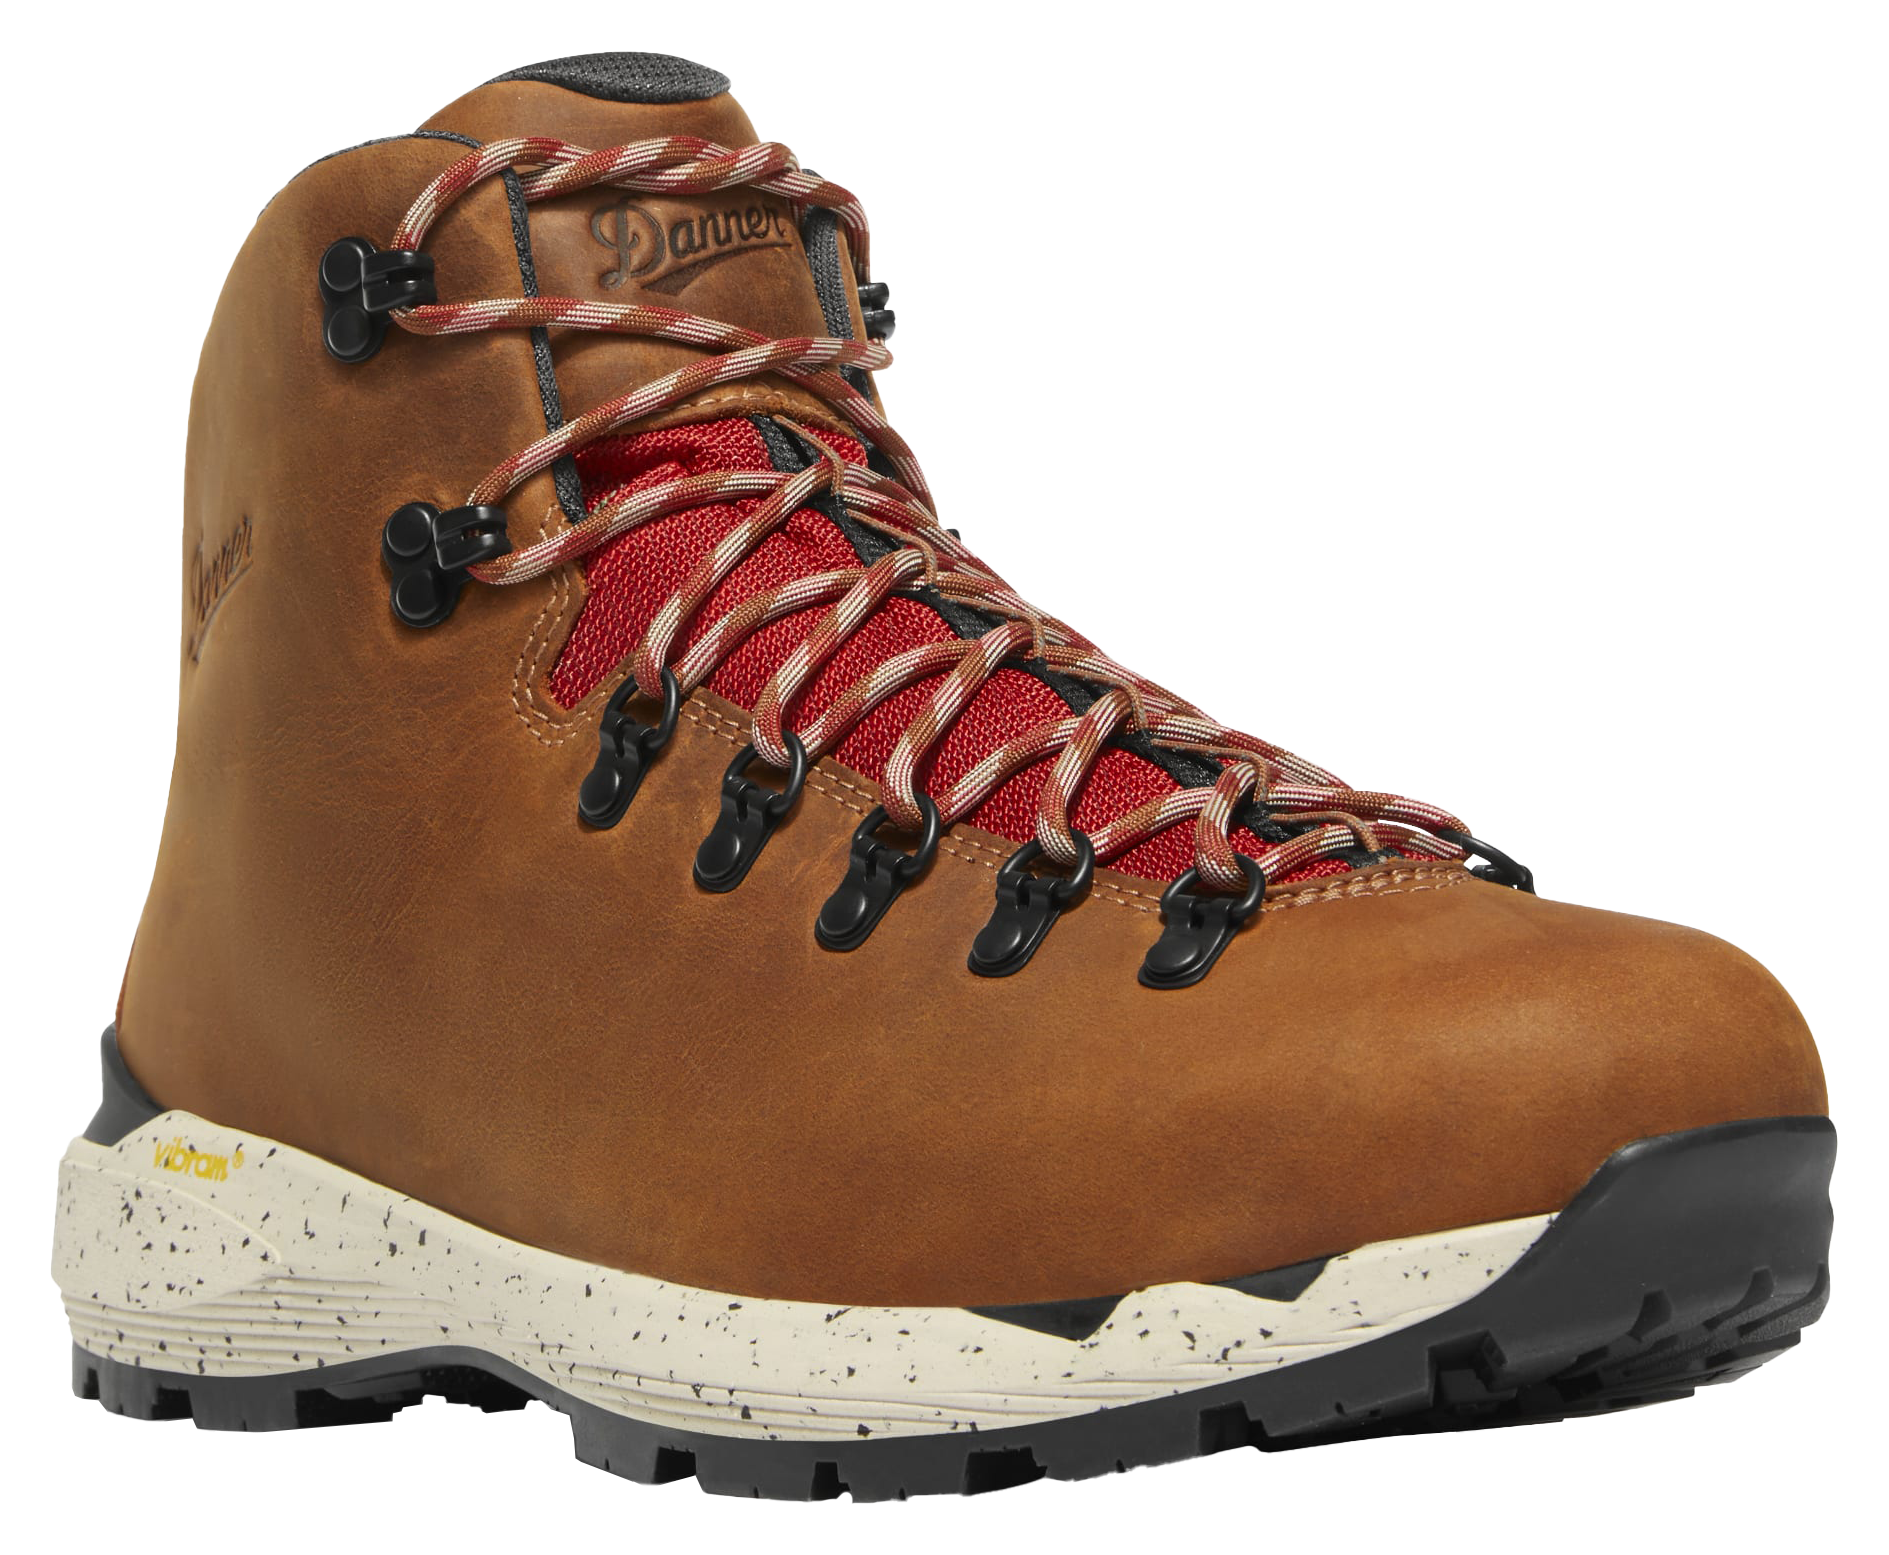 Danner Mountain 600 Evo GORE-TEX Hiking Boots for Men | Bass Pro Shops - Mocha Brown/Rhodo Red - 8.5M